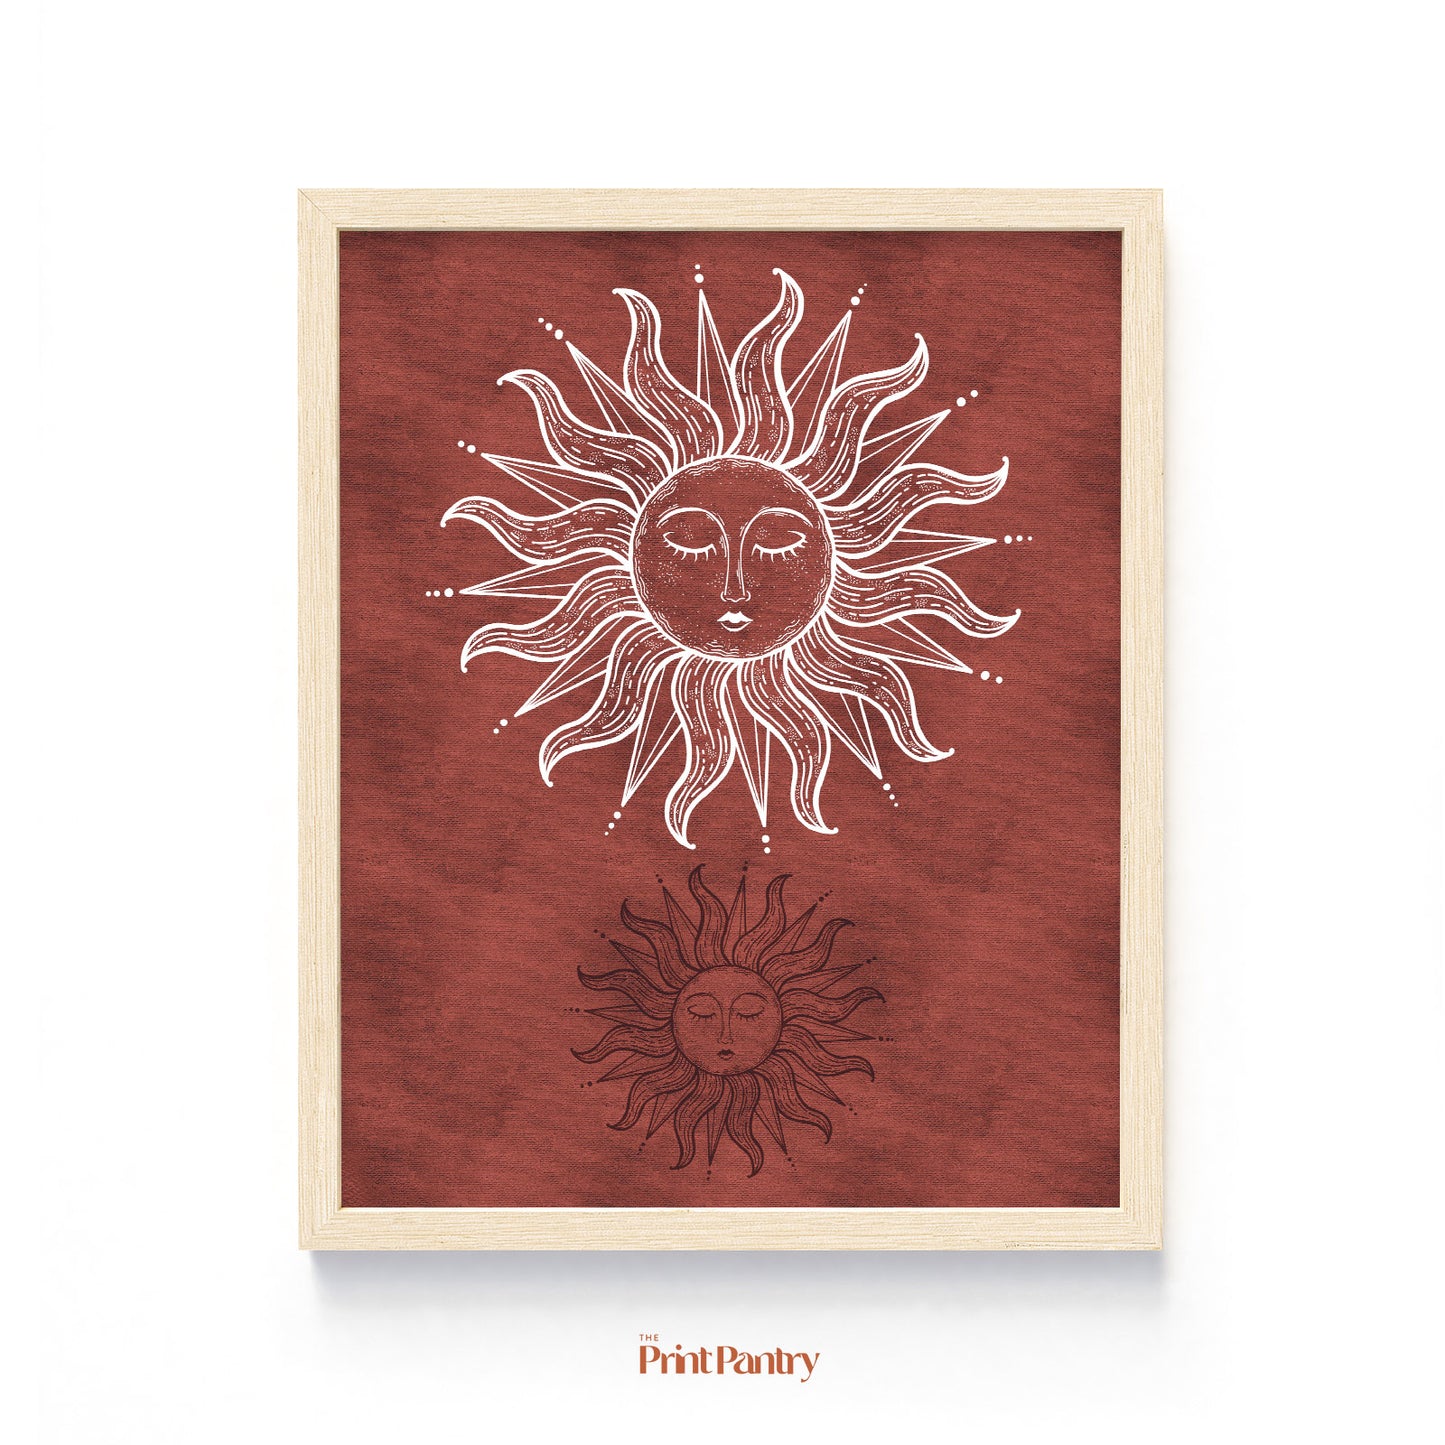 The Sun Art Print shown in a wooden frame